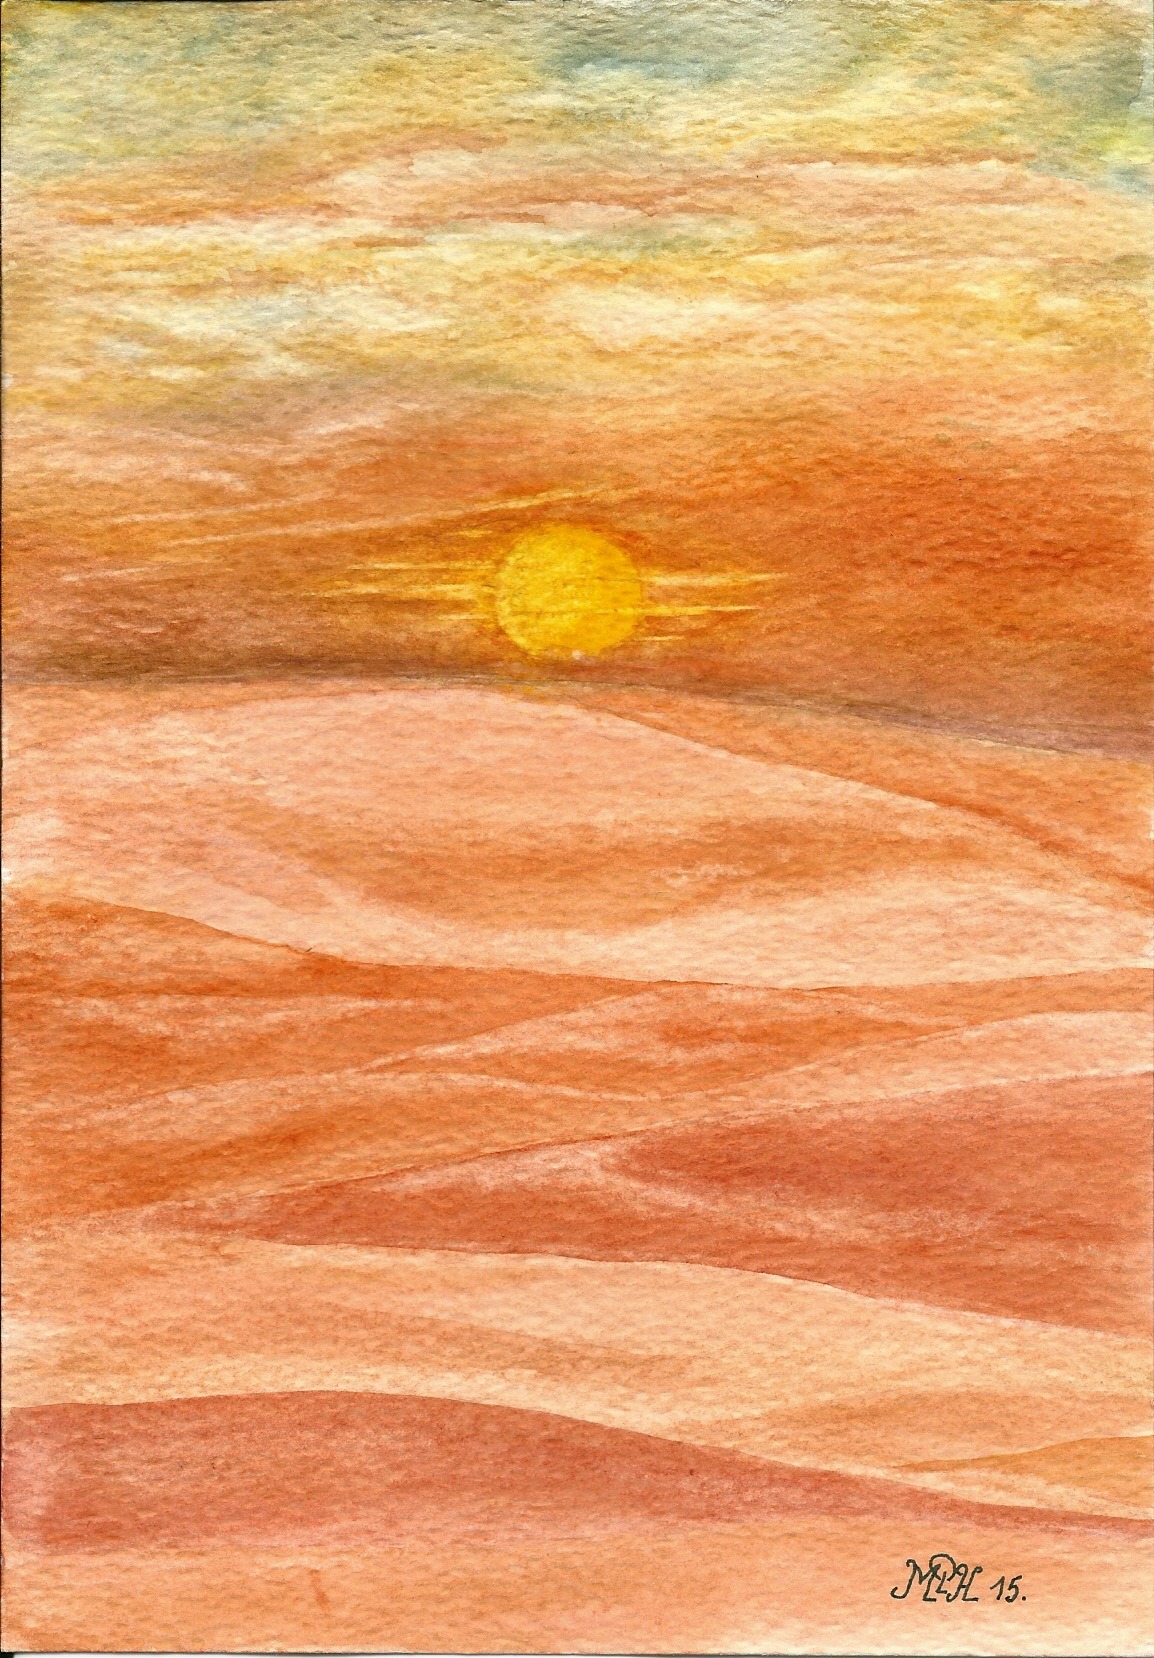 Aquarelle n°49: " Dunes "